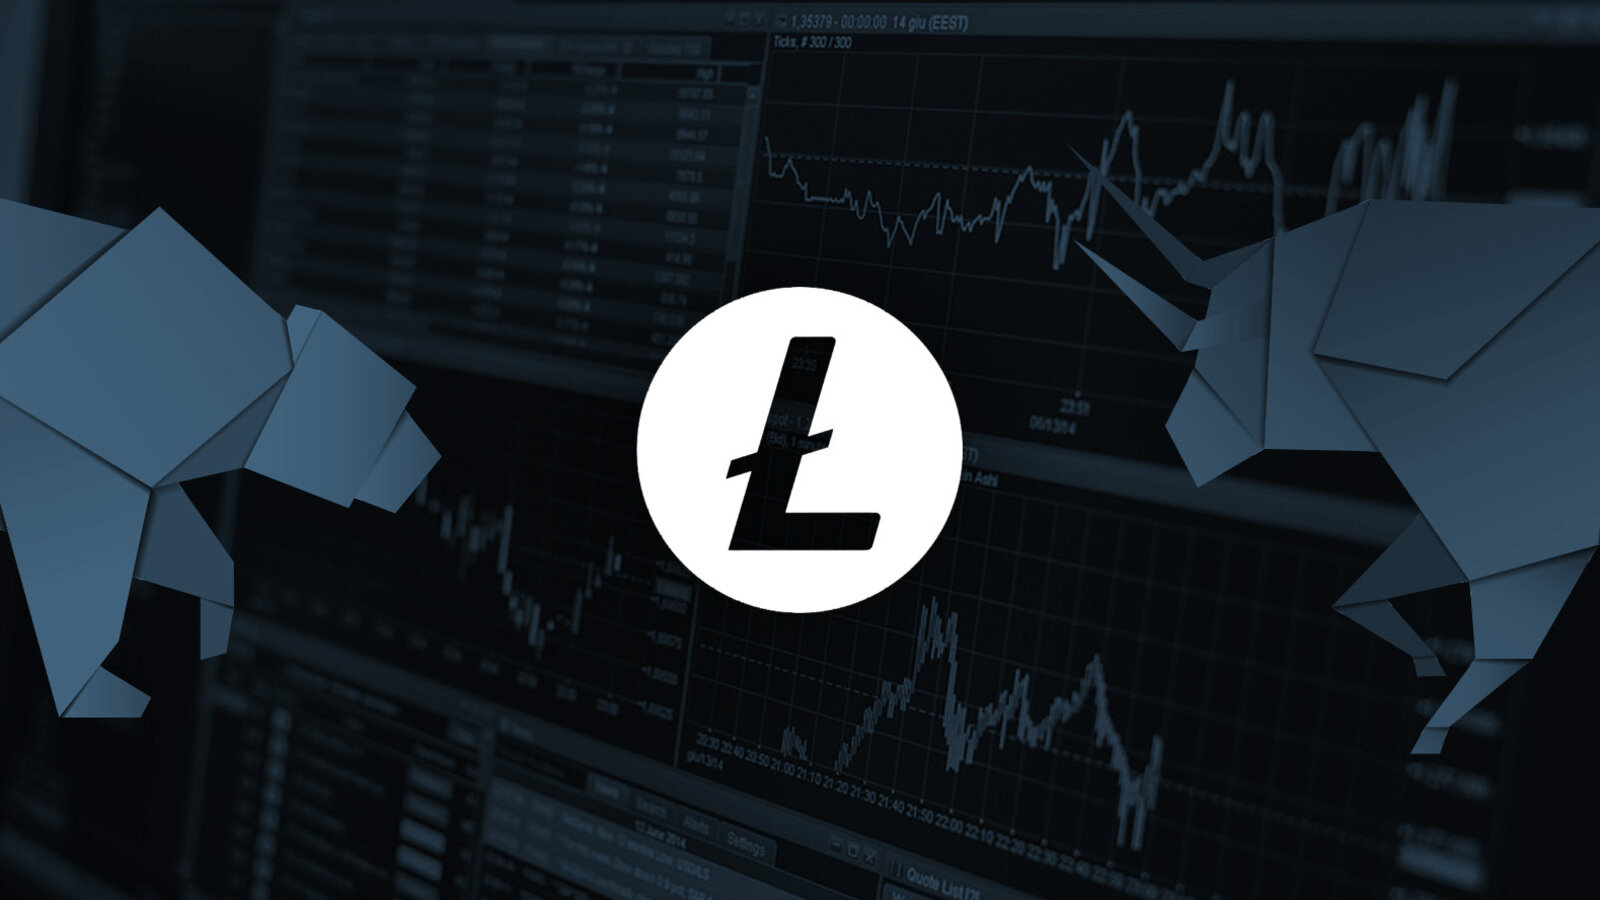 LTCUSD - Litecoin - USD Cryptocurrency Price - coinlog.fun